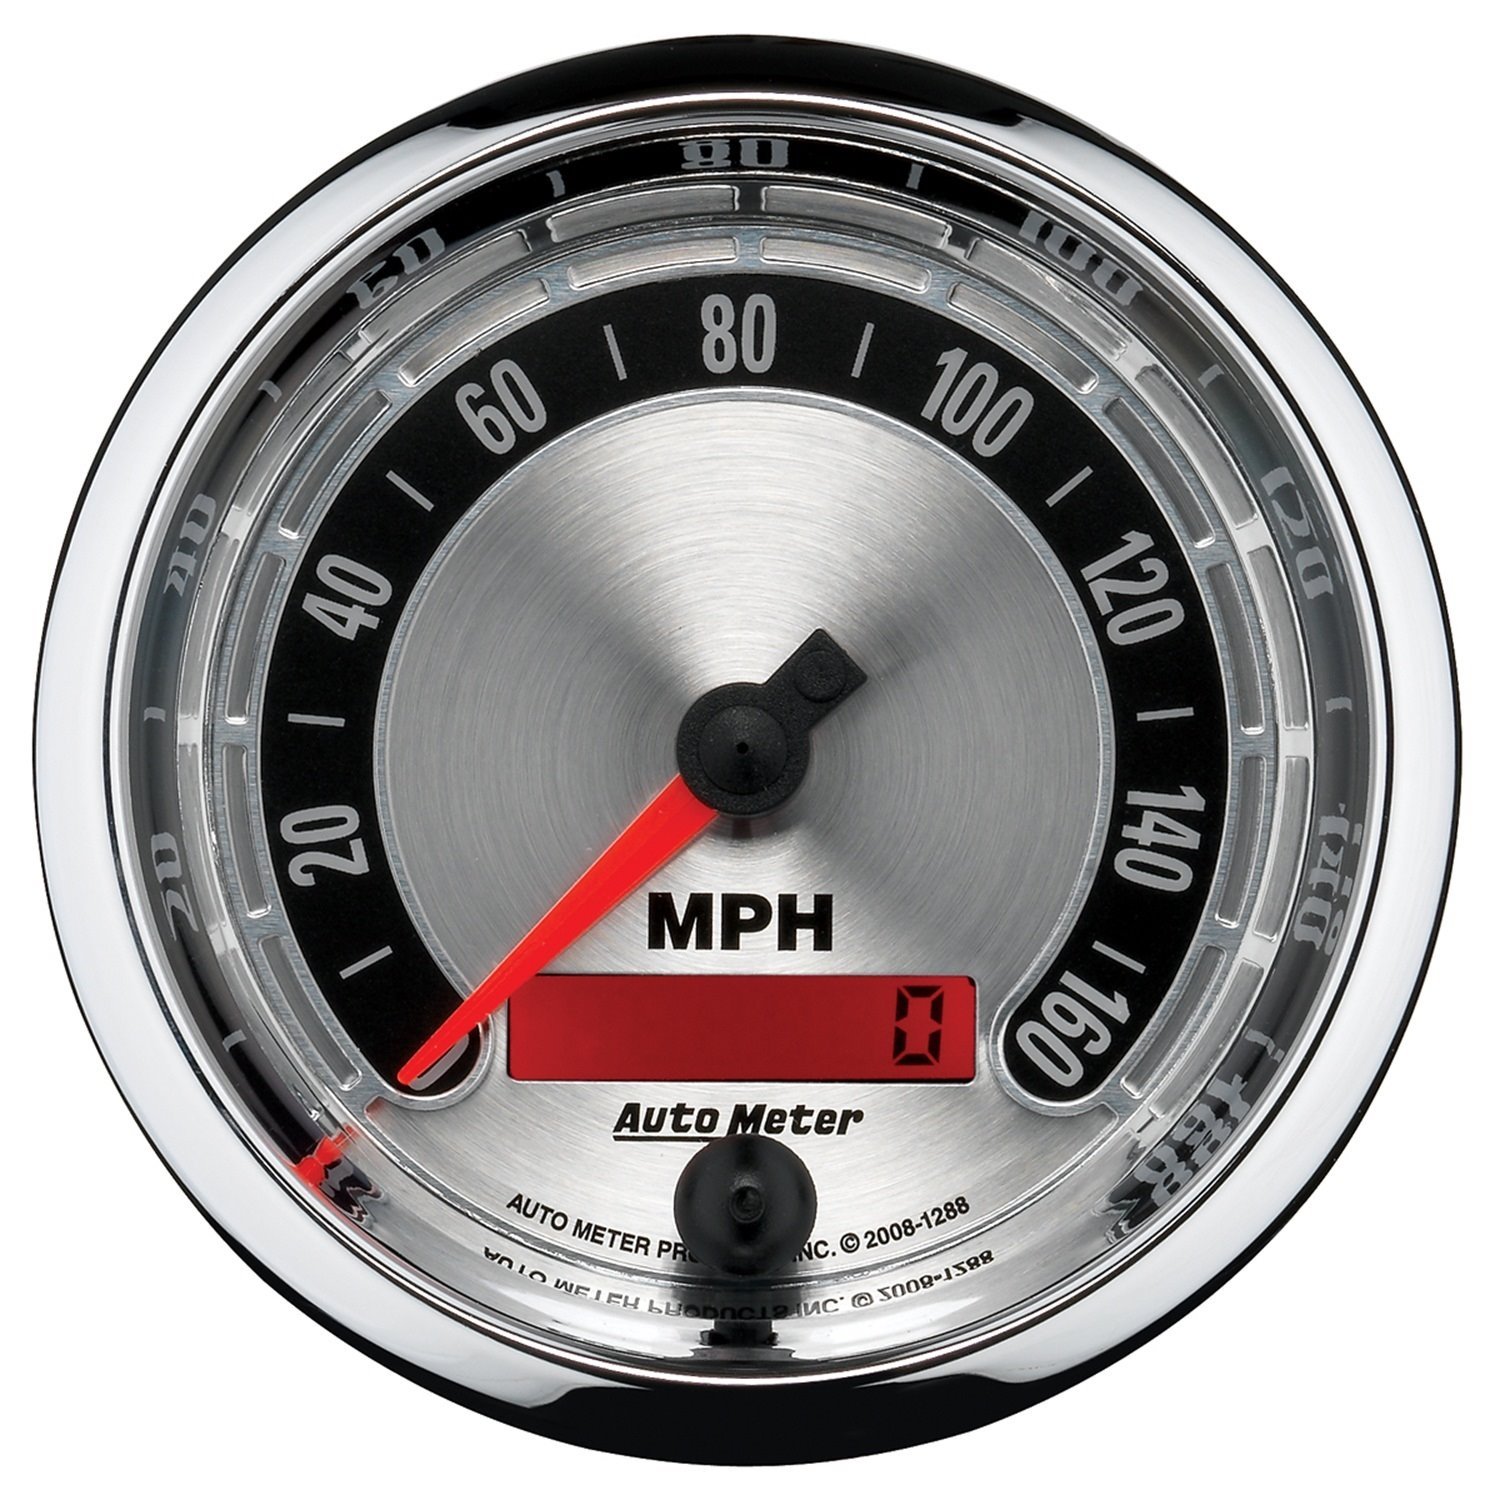 American Muscle Speedometer 3-3/8" Electrical